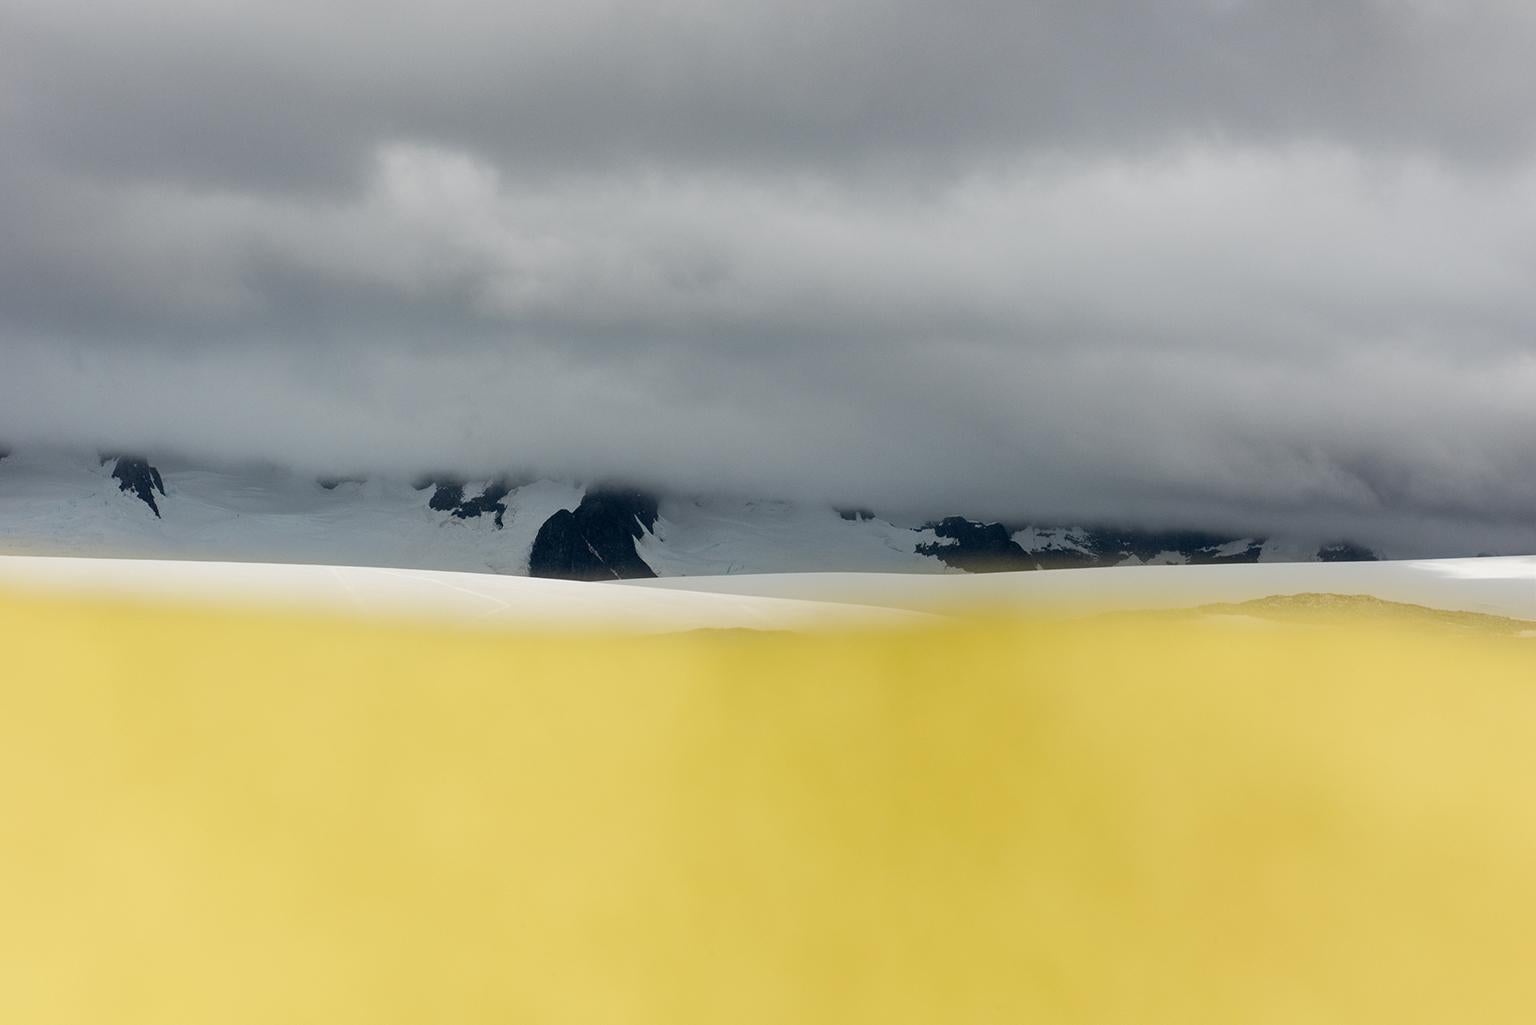 Jessica Houston Landscape Photograph - Enduring Claims (Antarctica)